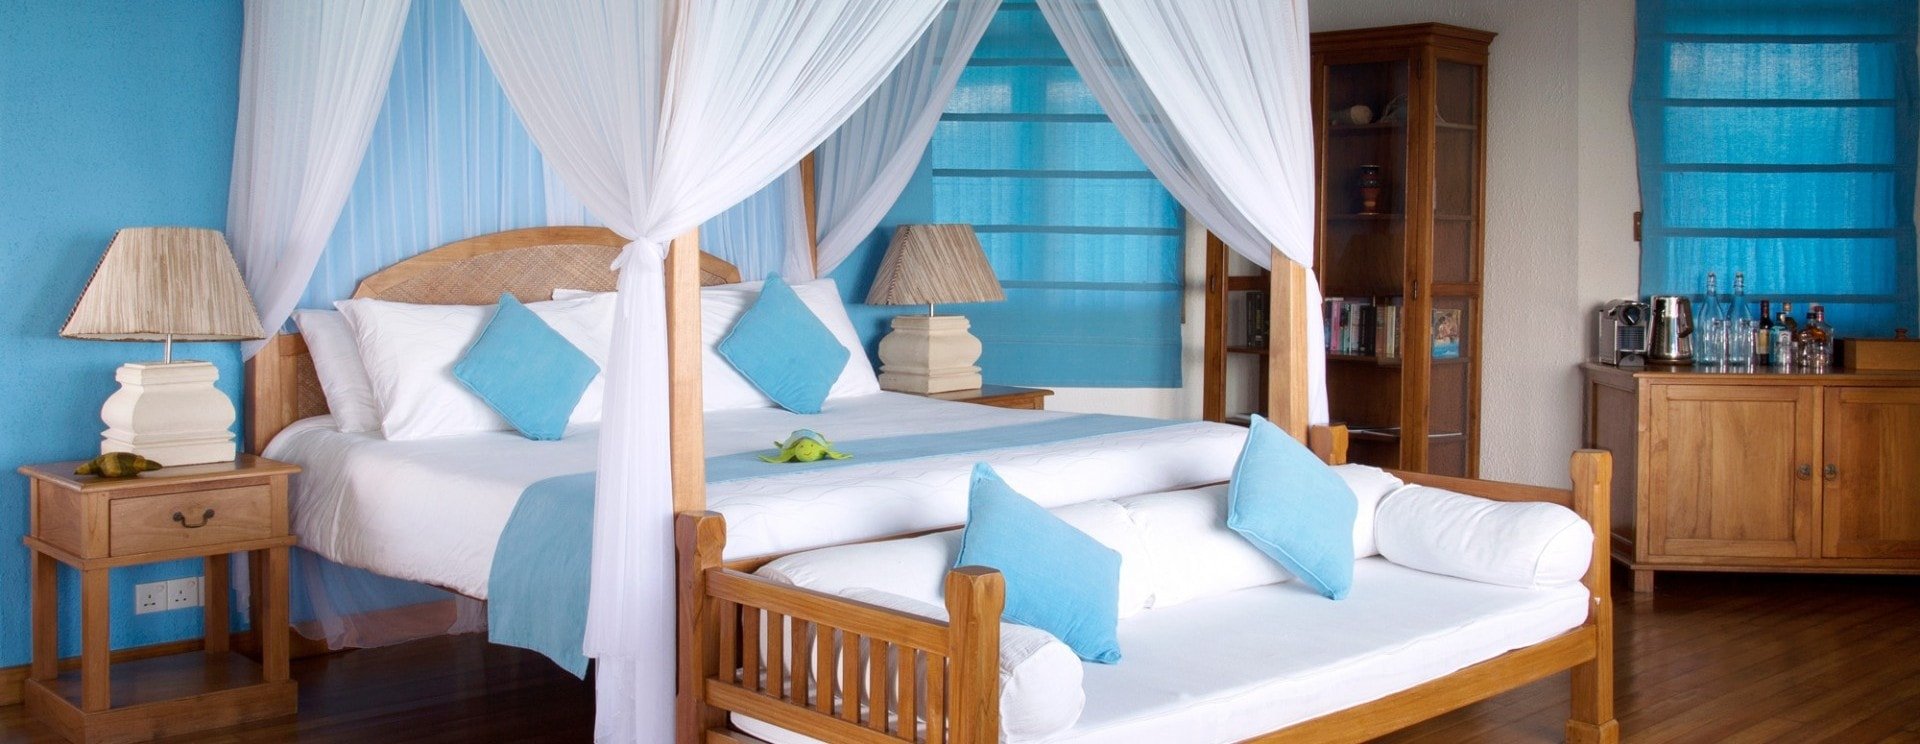 resort-maldive-coco-palm-dhuni-kolhu-bedroom-lagoon-villa.jpg